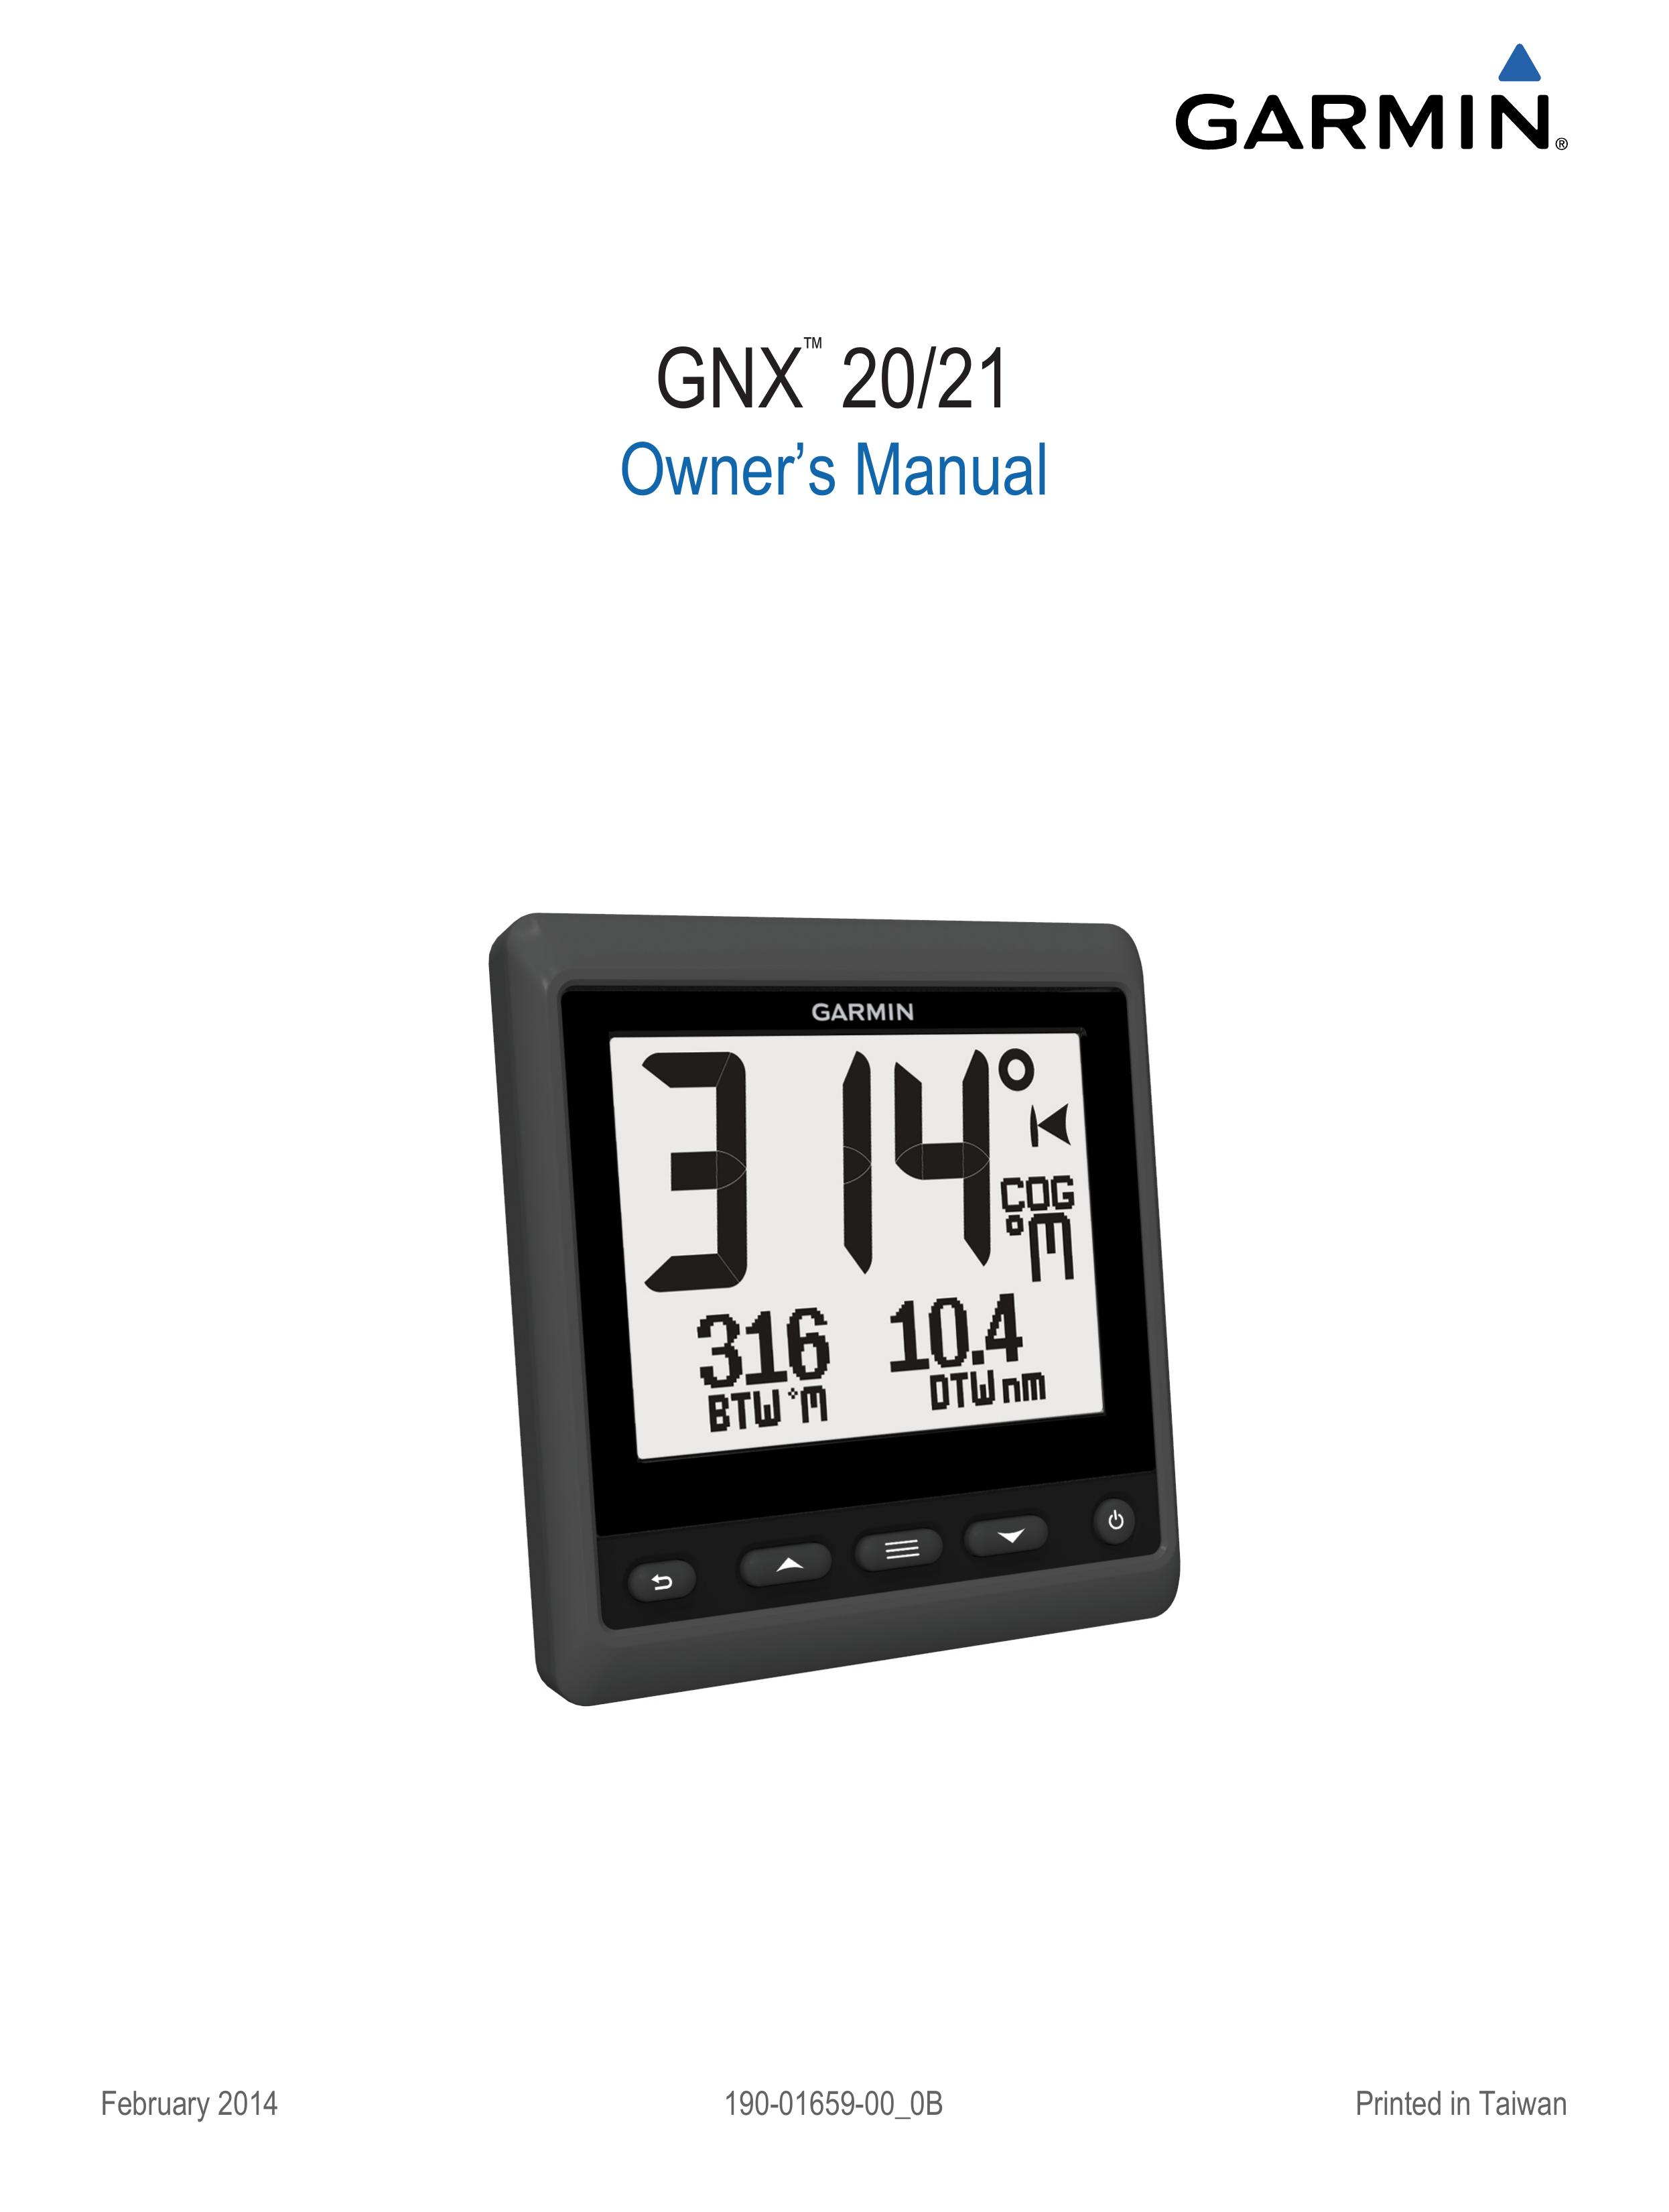 Garmin garmin Weather Radio User Manual